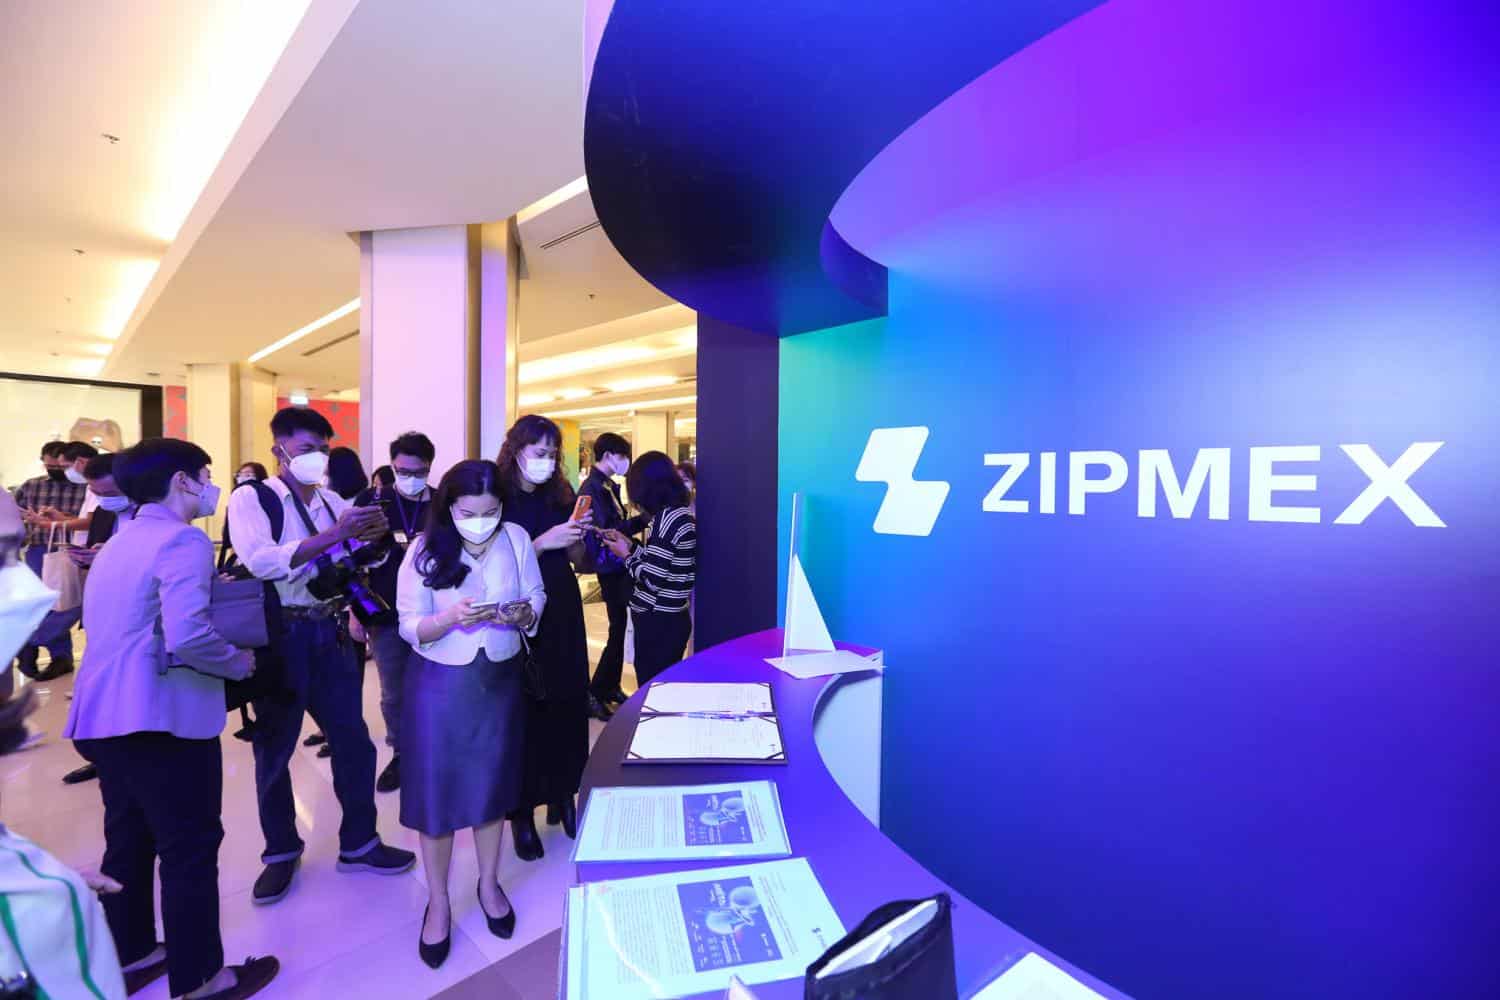 Zipmex Thailand Investors Face US$135 Million in Losses